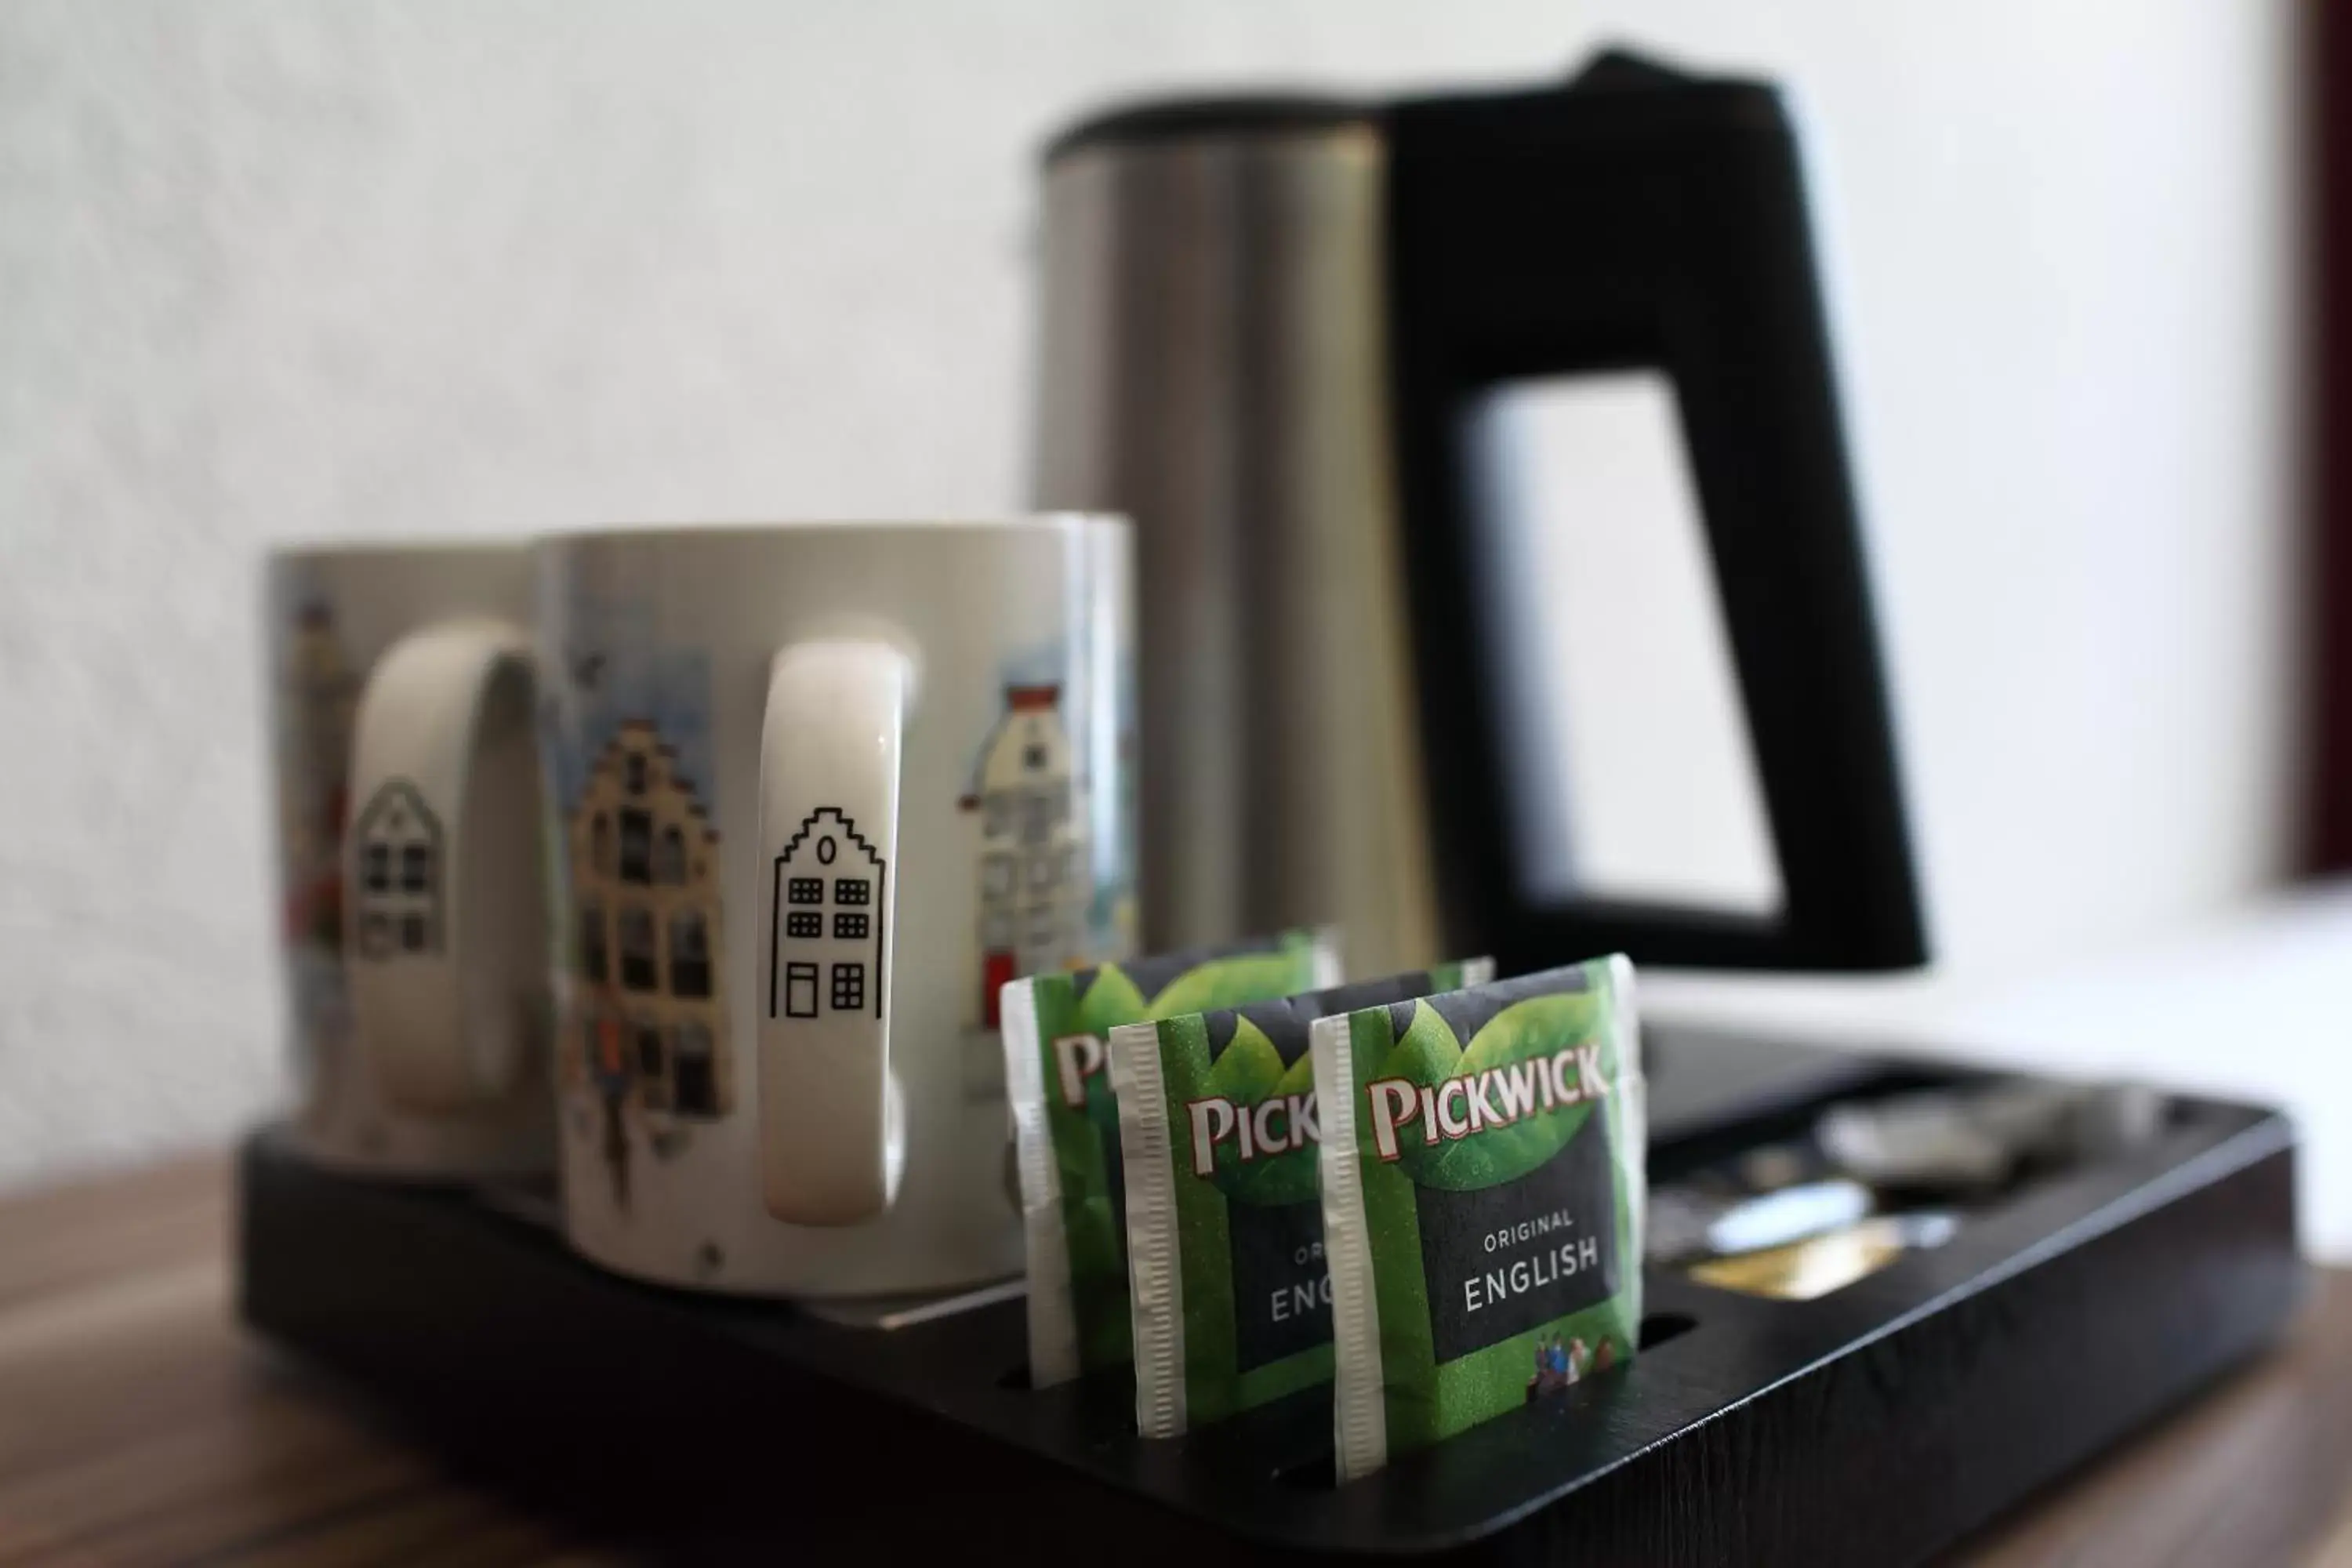 Coffee/tea facilities in Hotel Asterisk, a family run hotel